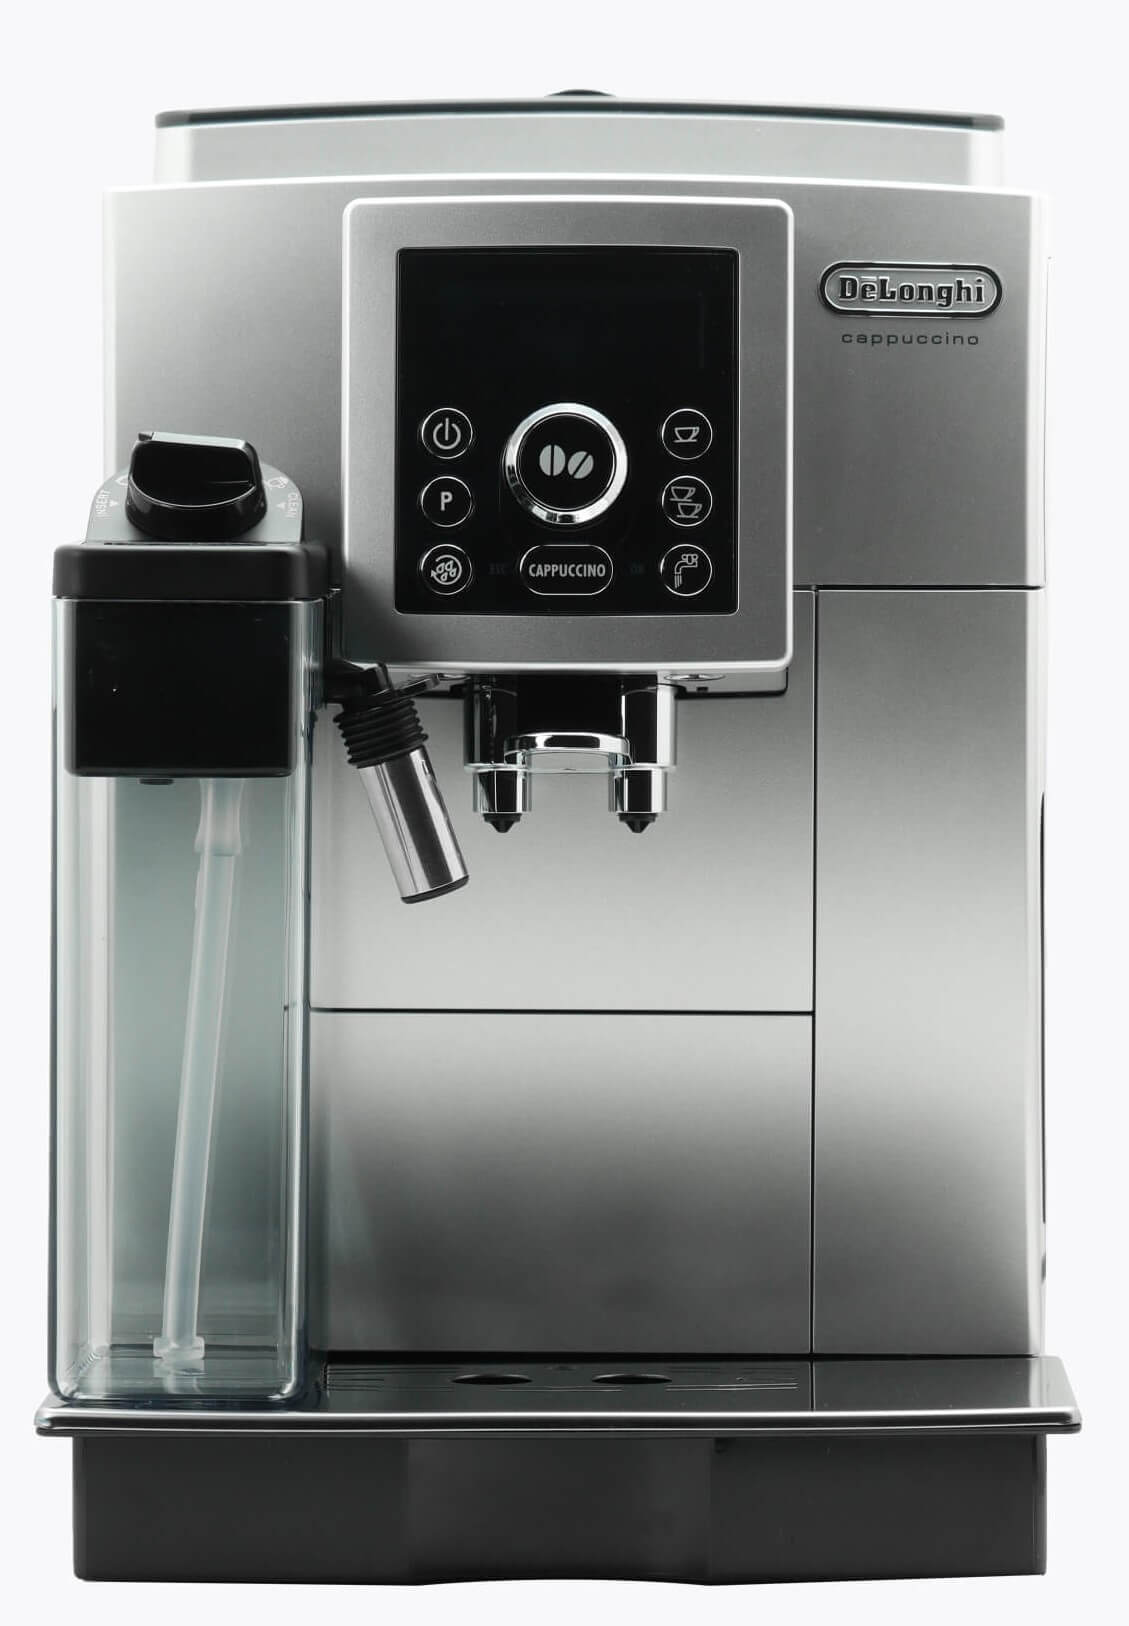 DeLonghi Kaffeevollautomaten im Vergleich | roastmarket Magazin